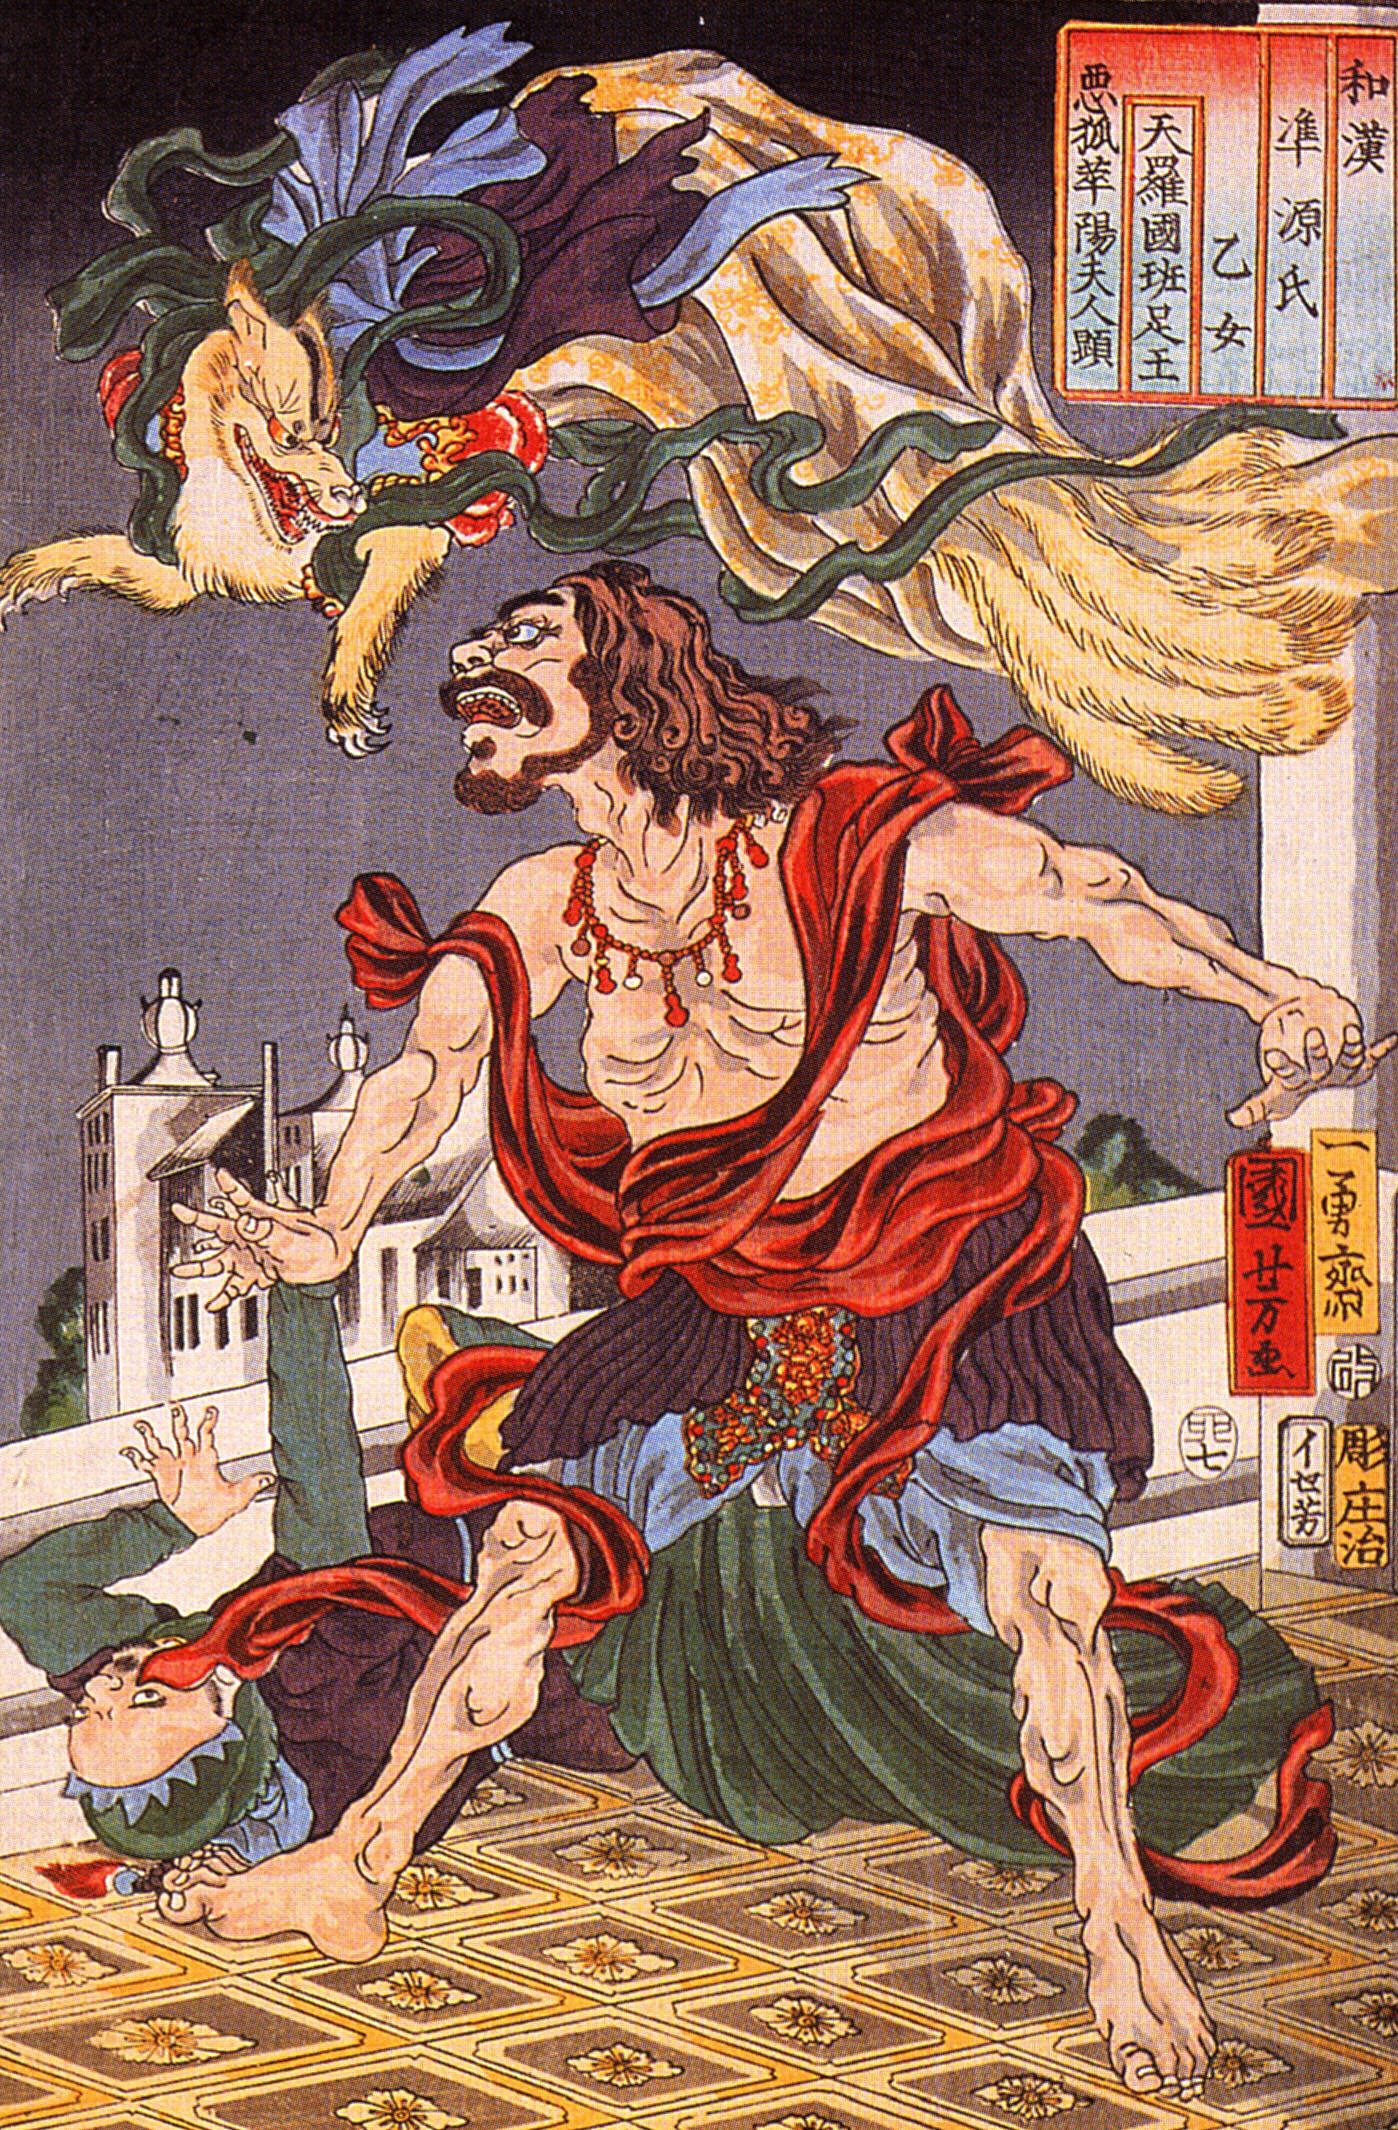 Prince Hanzoku aterrorizado por un yokai zorro de nueve colas